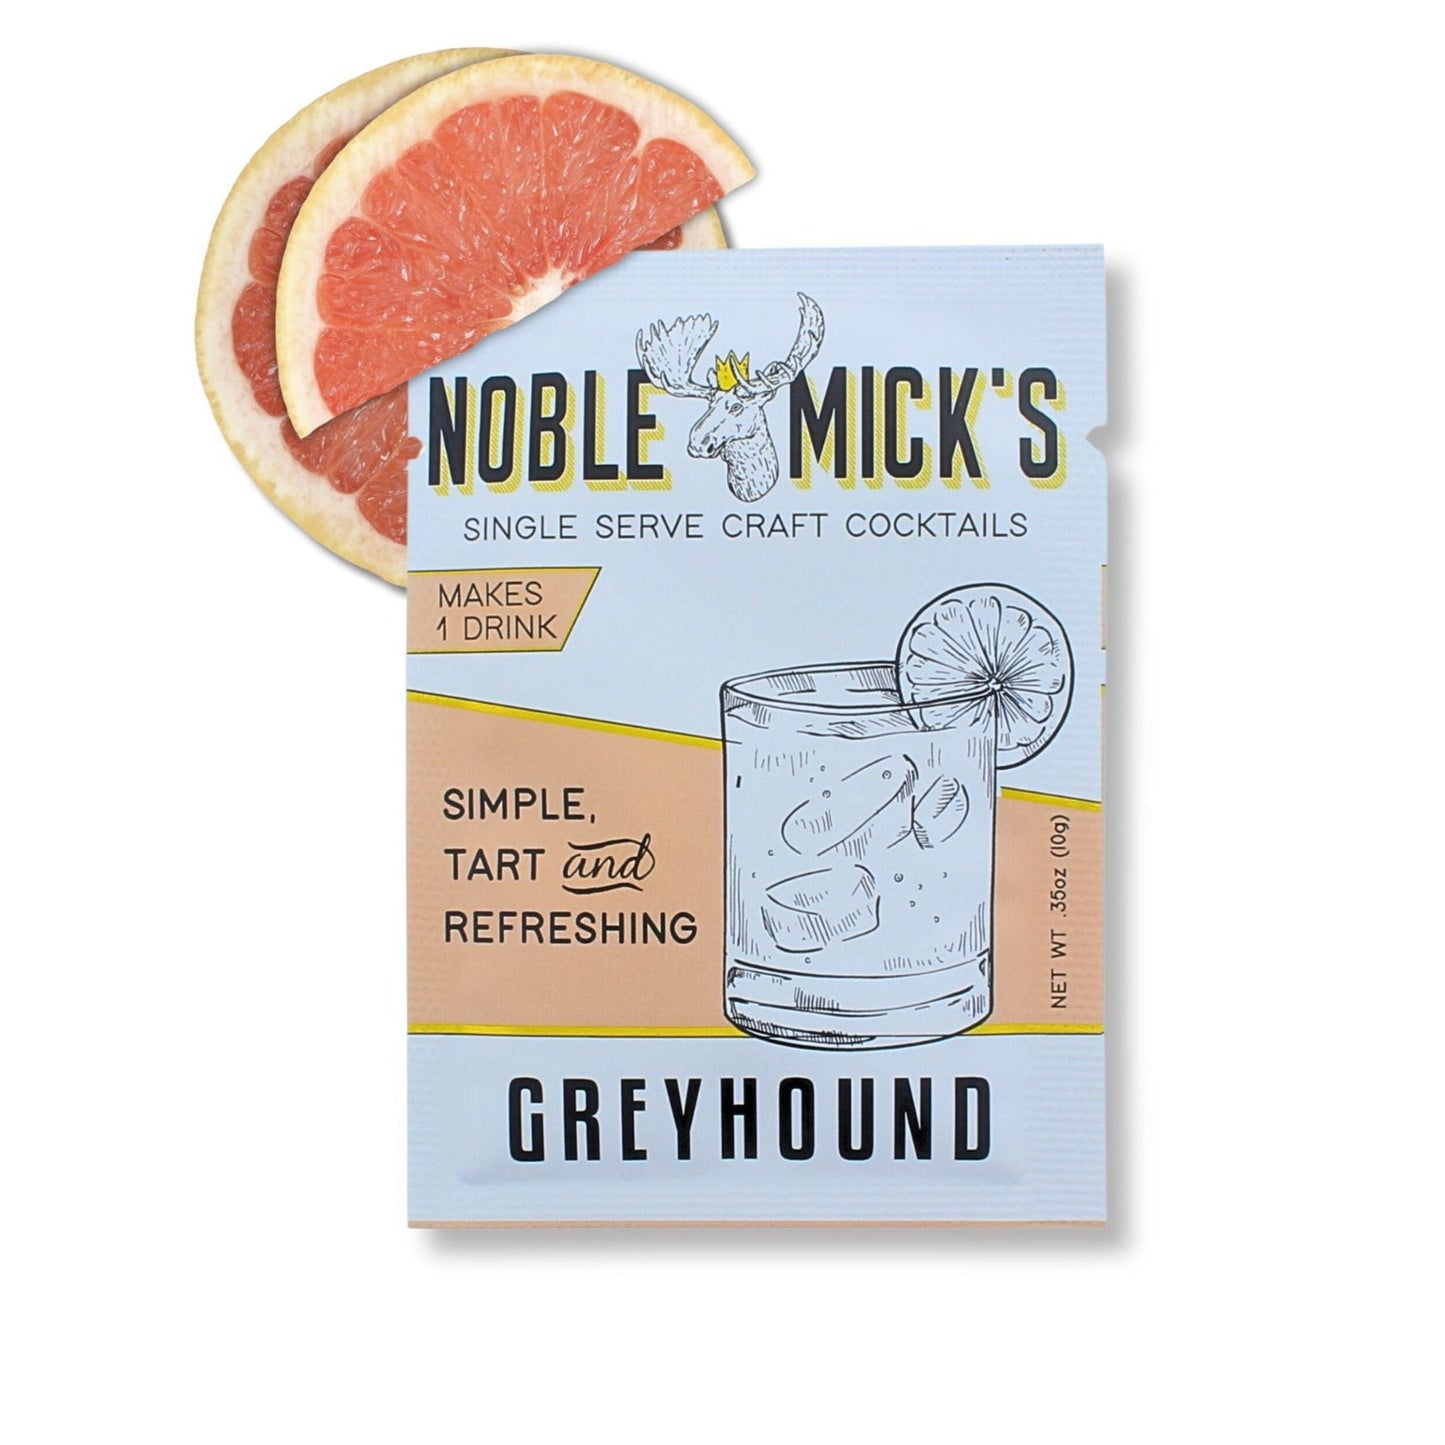 Greyhound (24-pack)